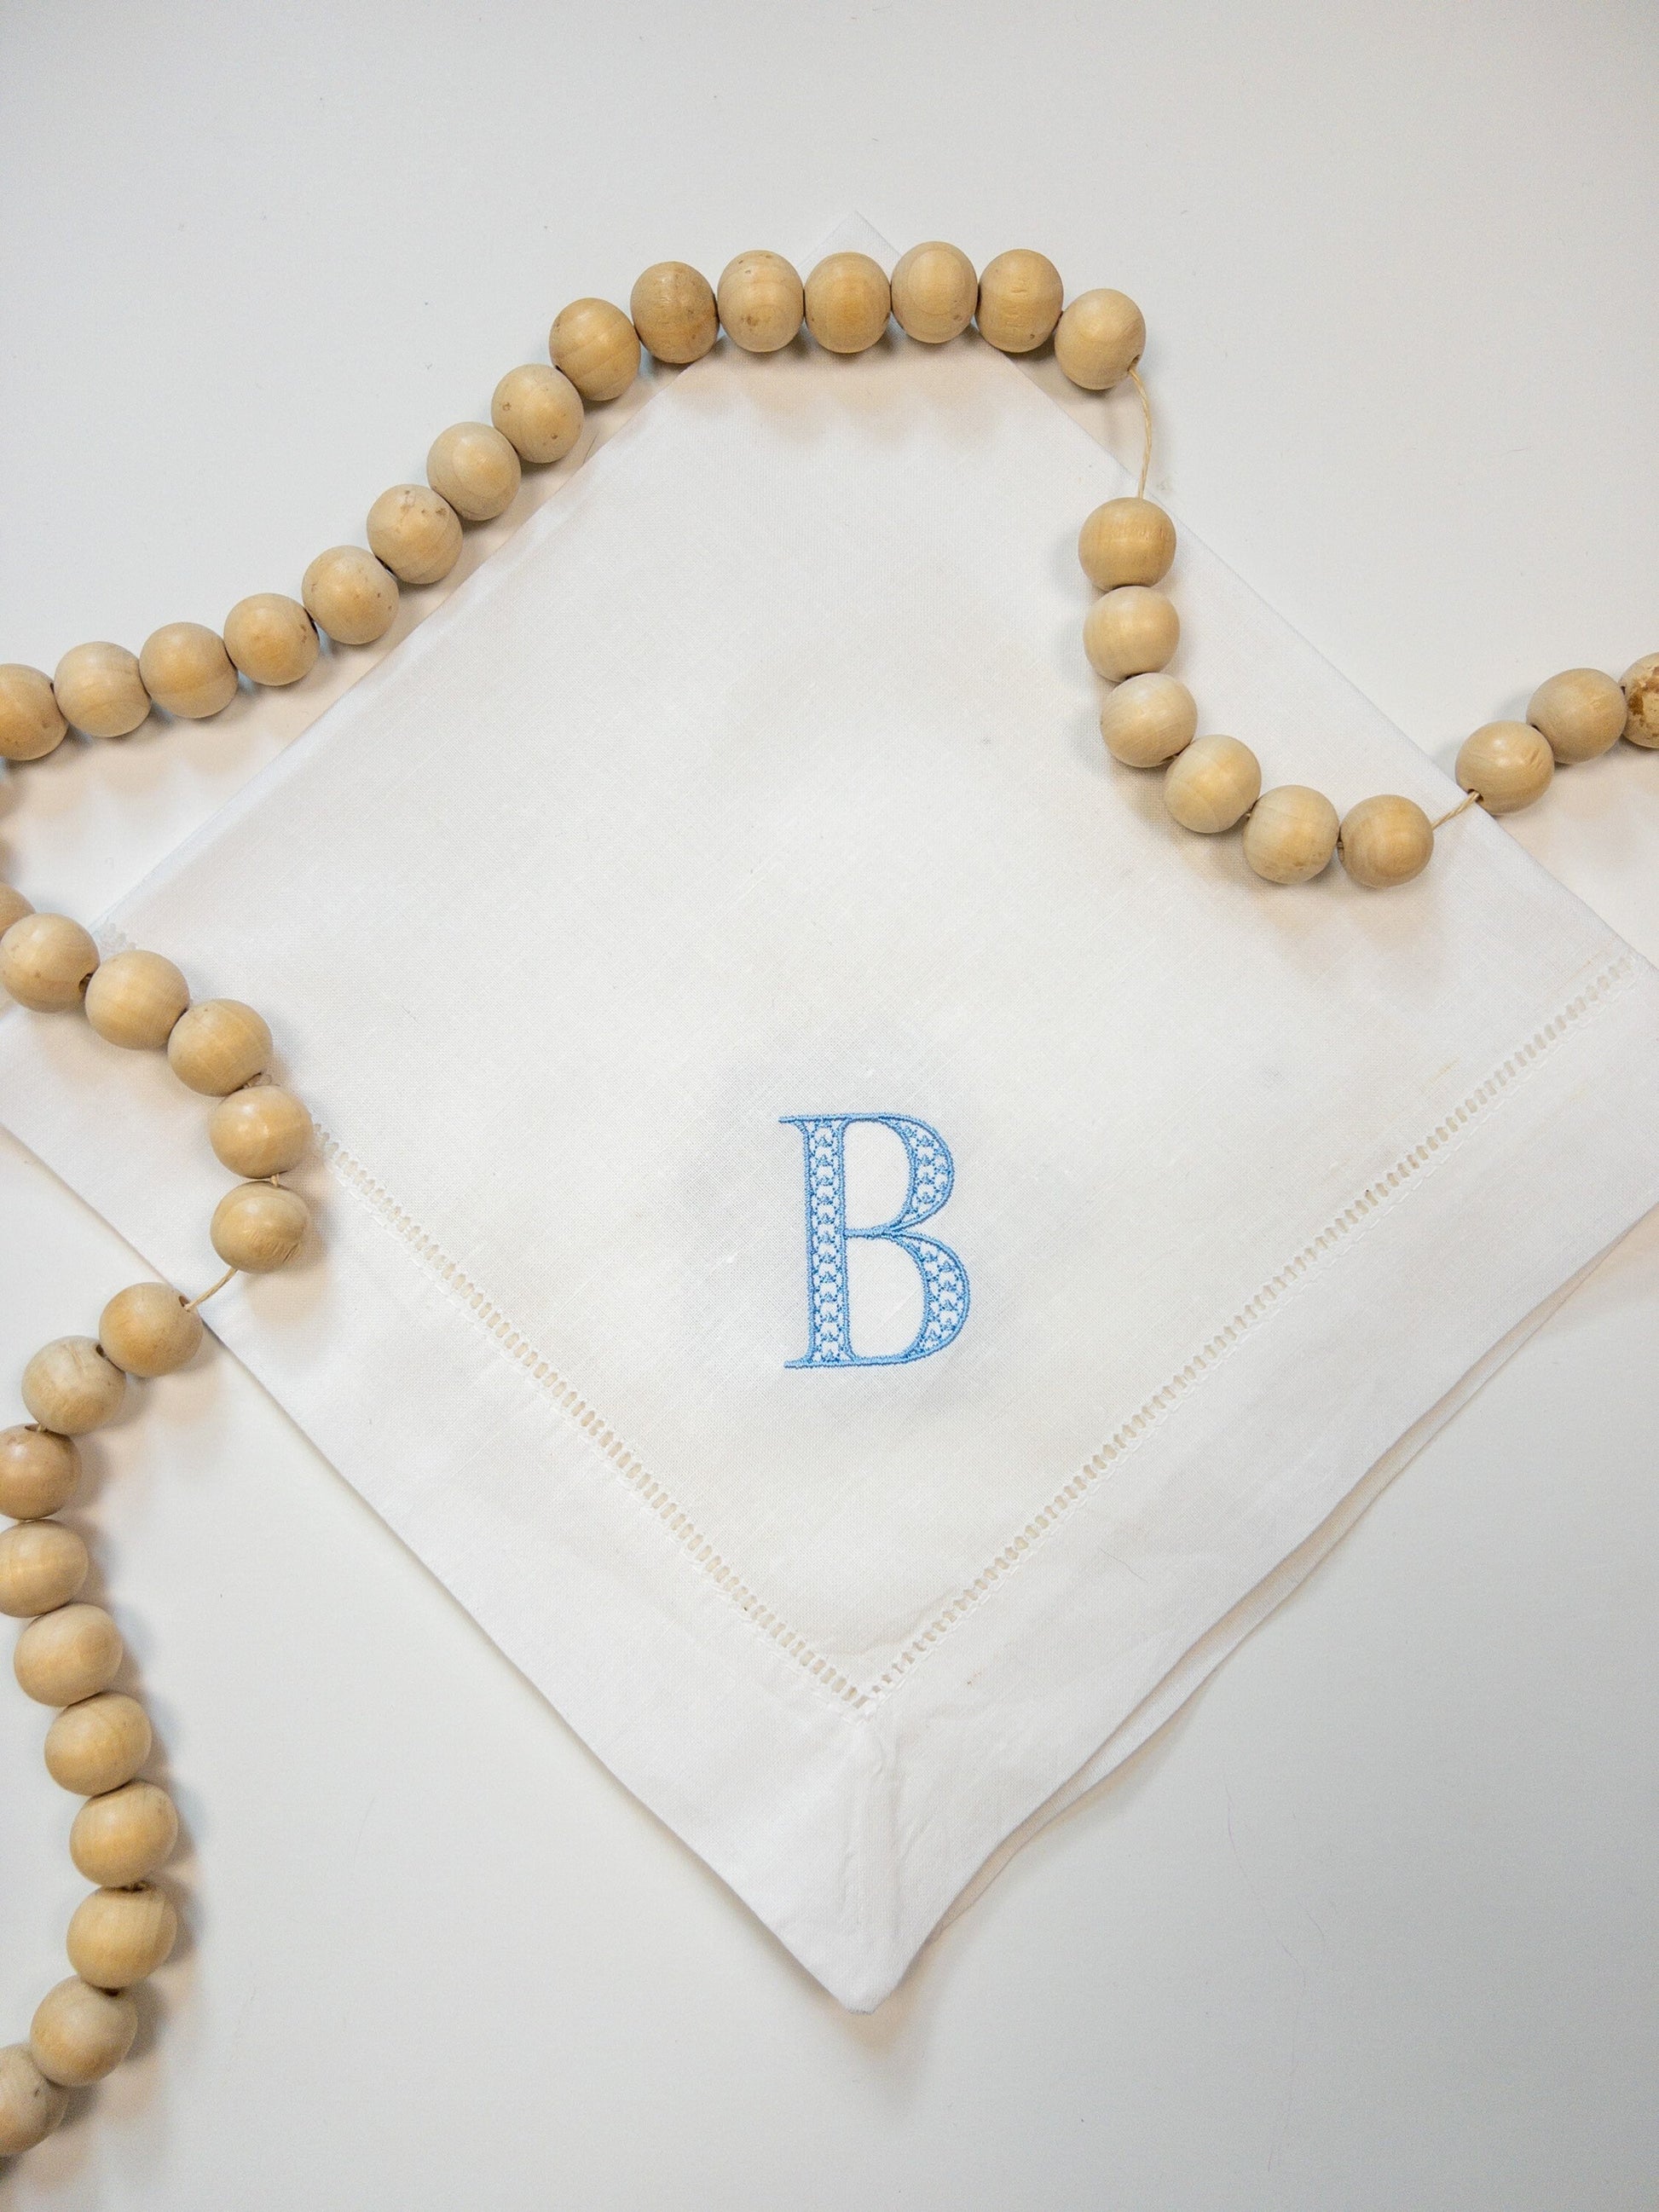 Custom Monogrammed White Linen Dinner Napkins, Personalized Cloth Napkins